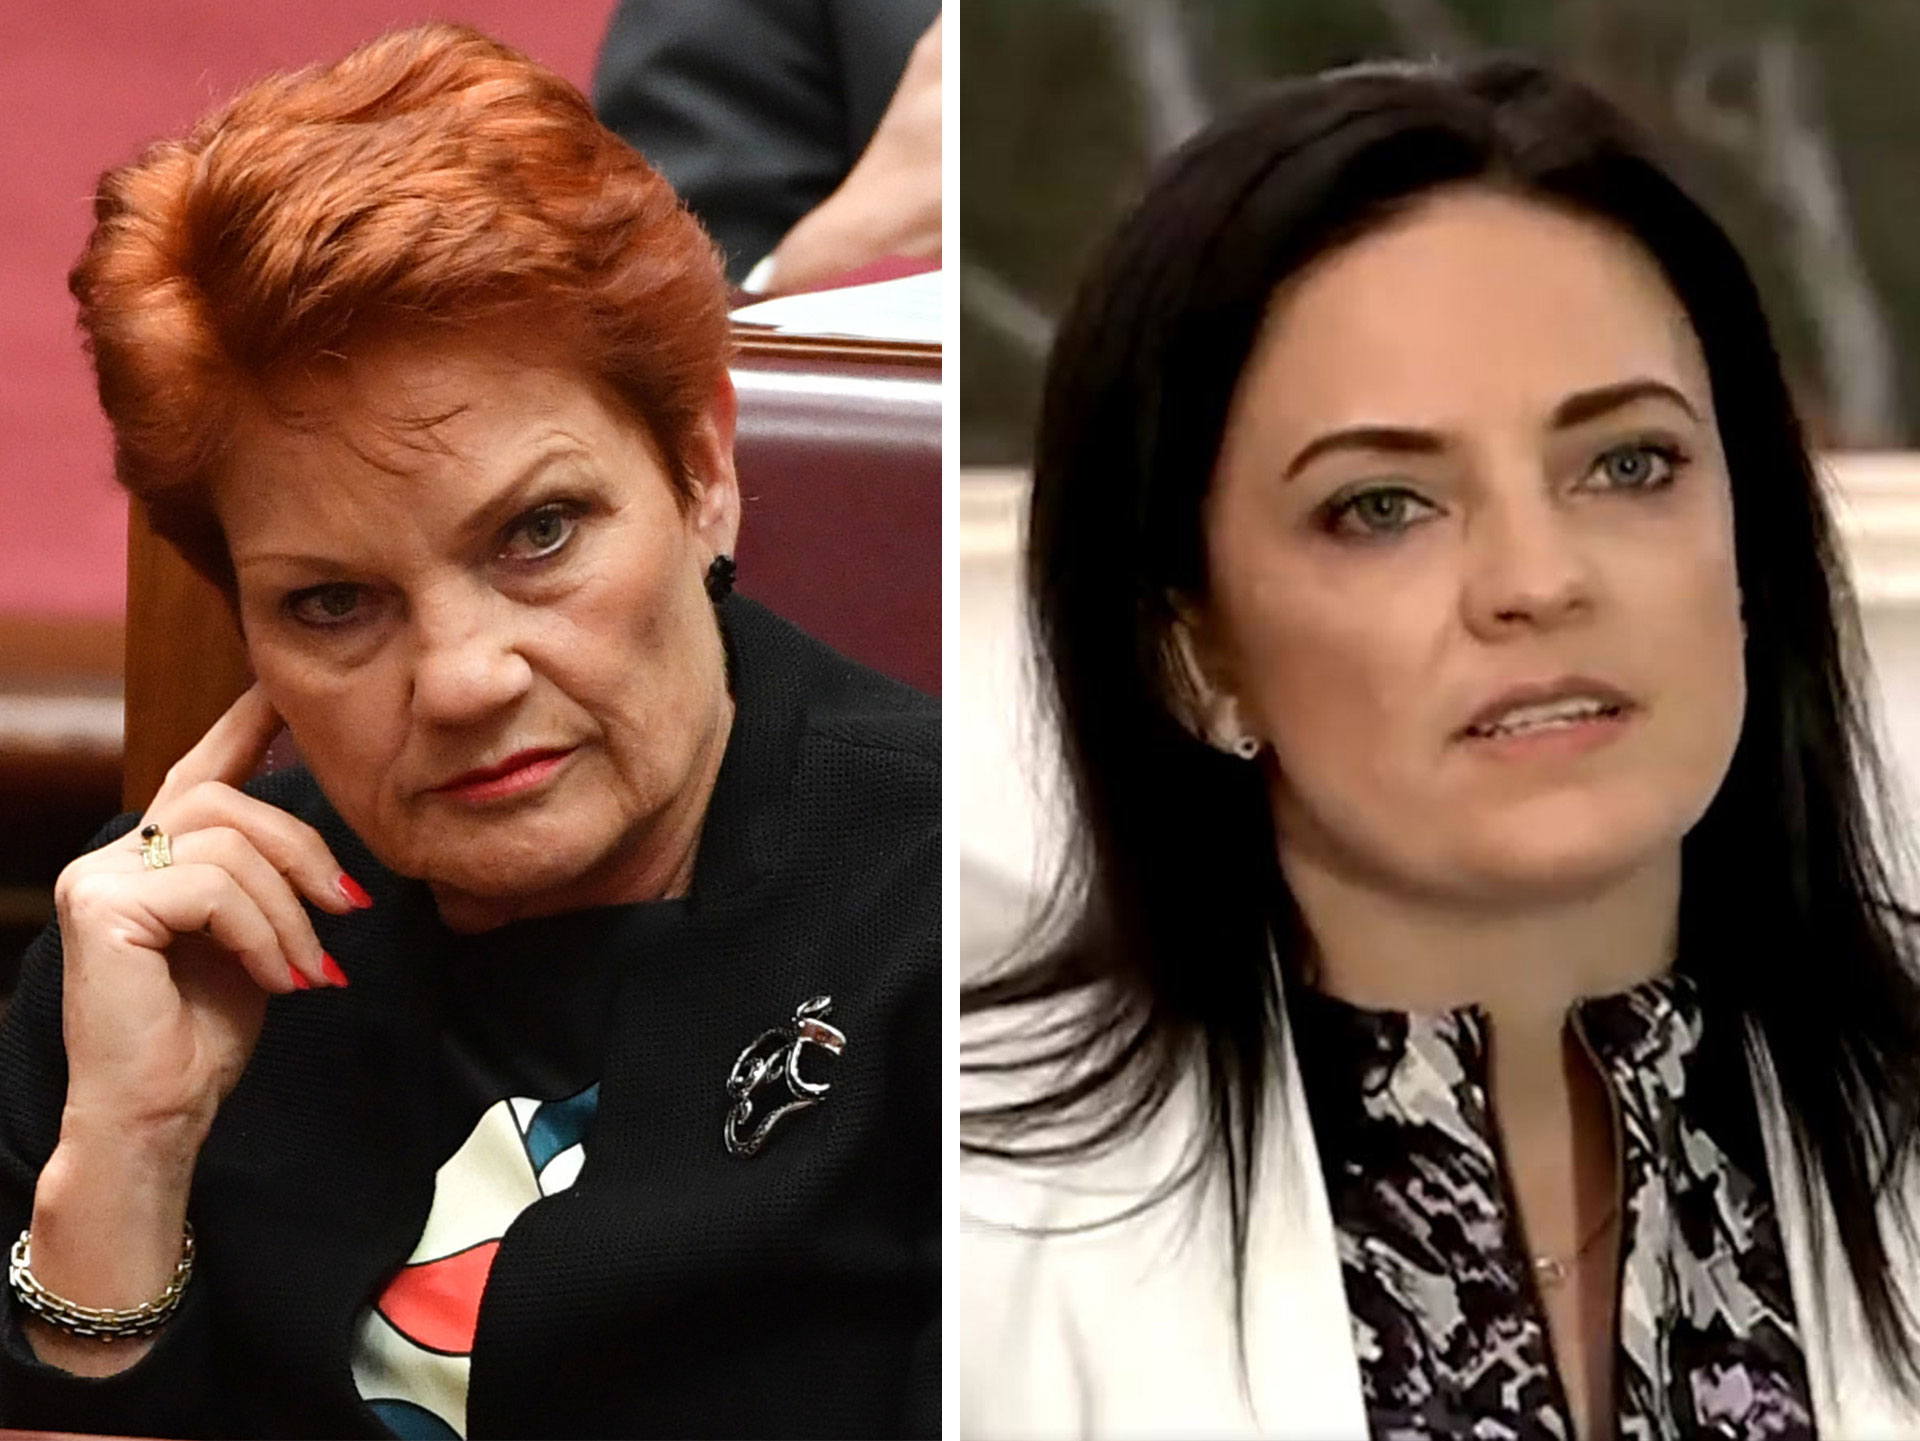 Politician with autistic son has choice words for Pauline Hanson